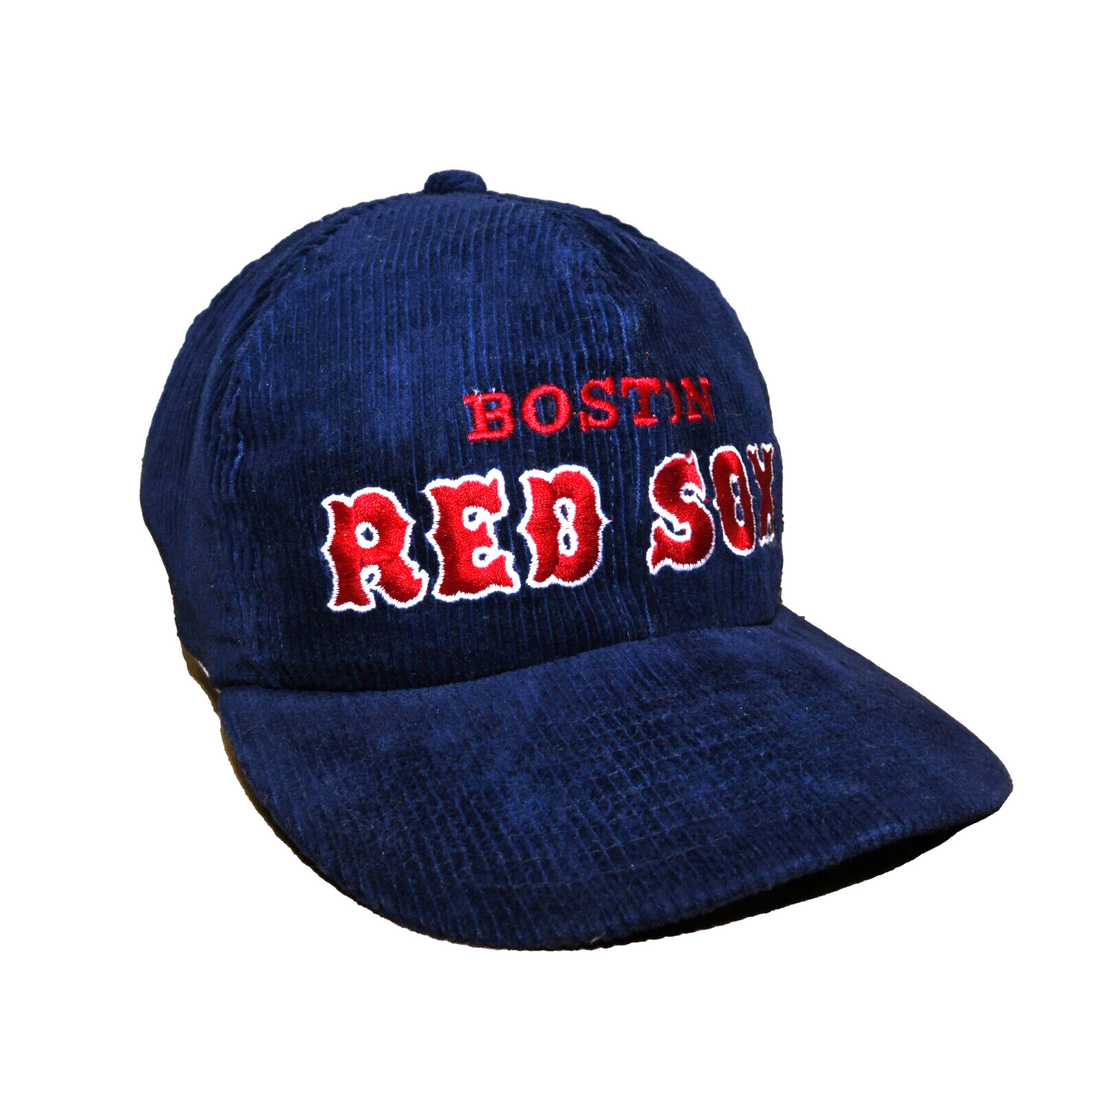 Vintage Boston Red Sox Corduroy Snapback Hat Cap OSFA 90s MLB